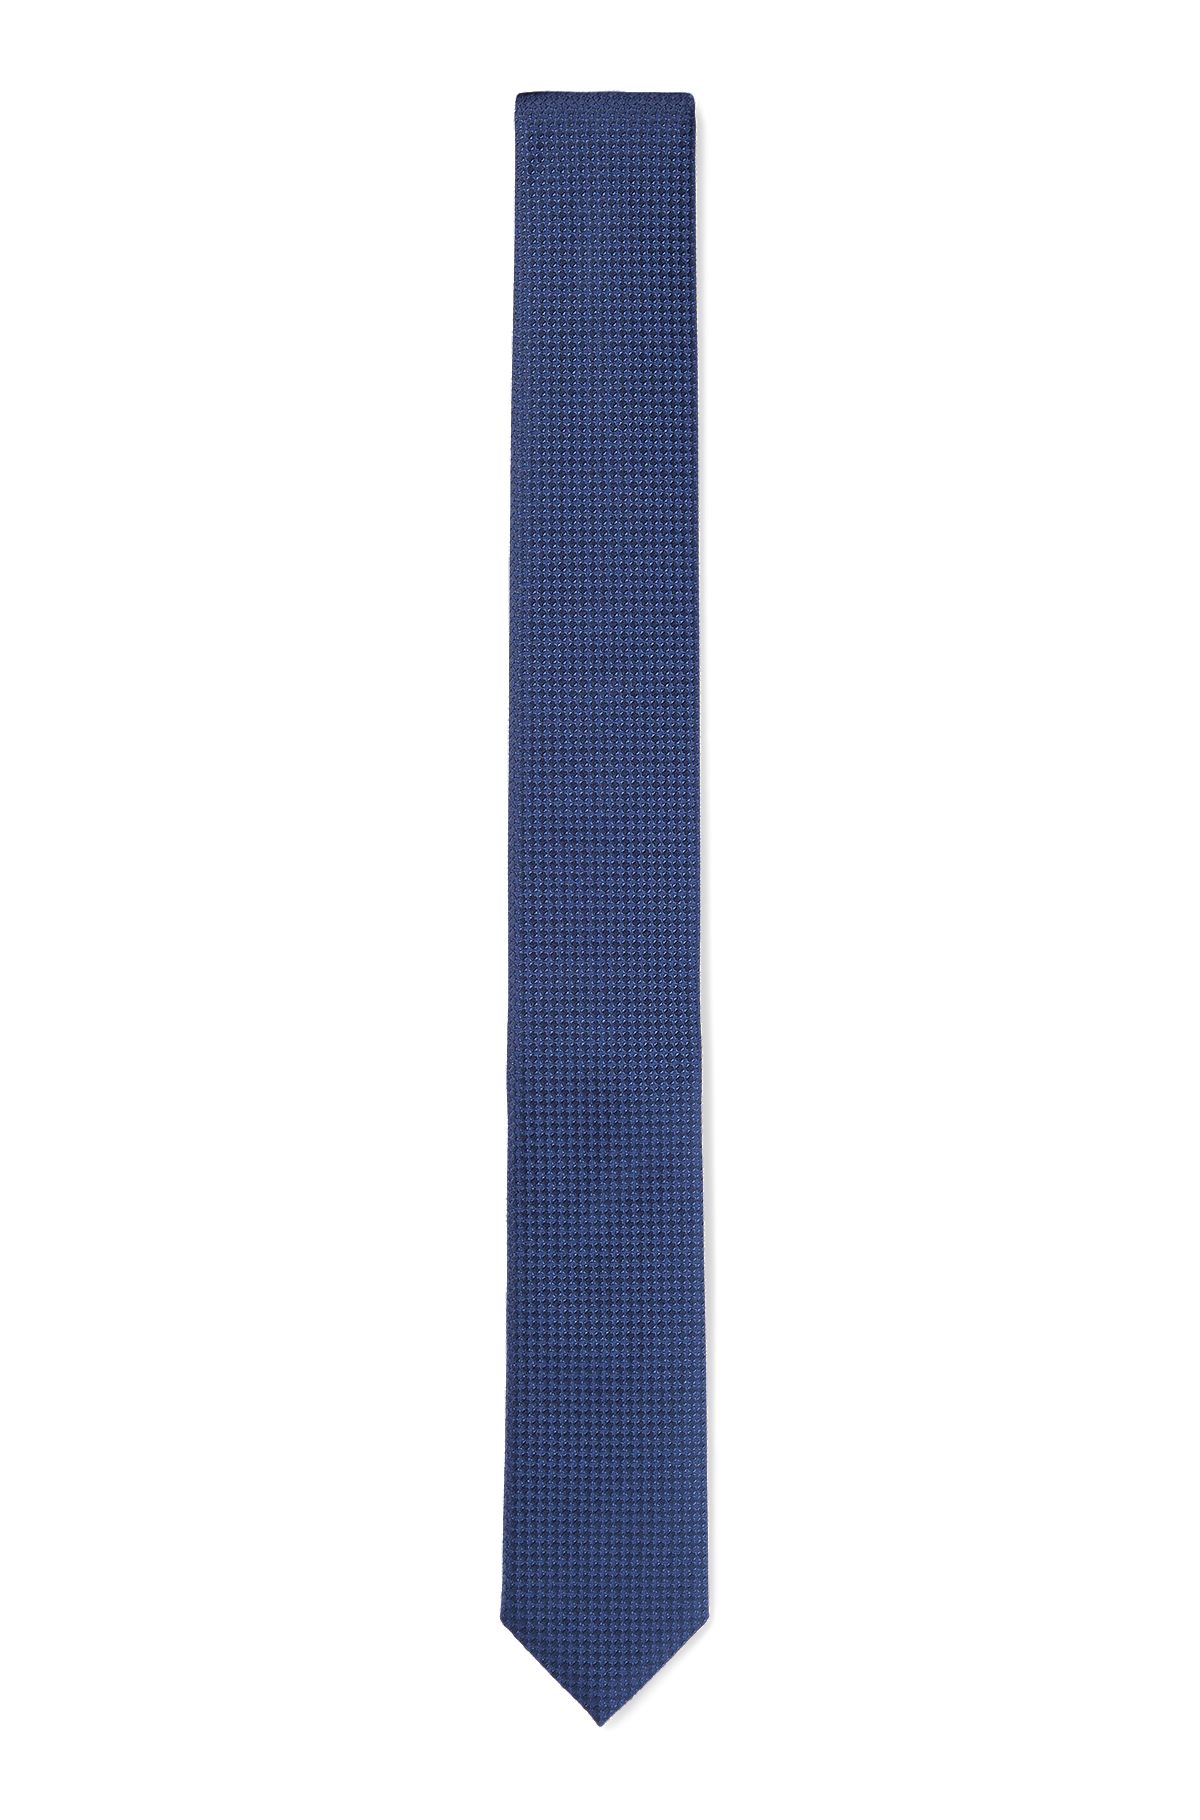 Krawatte aus Seiden-Jacquard mit filigranem Muster, Dunkelblau